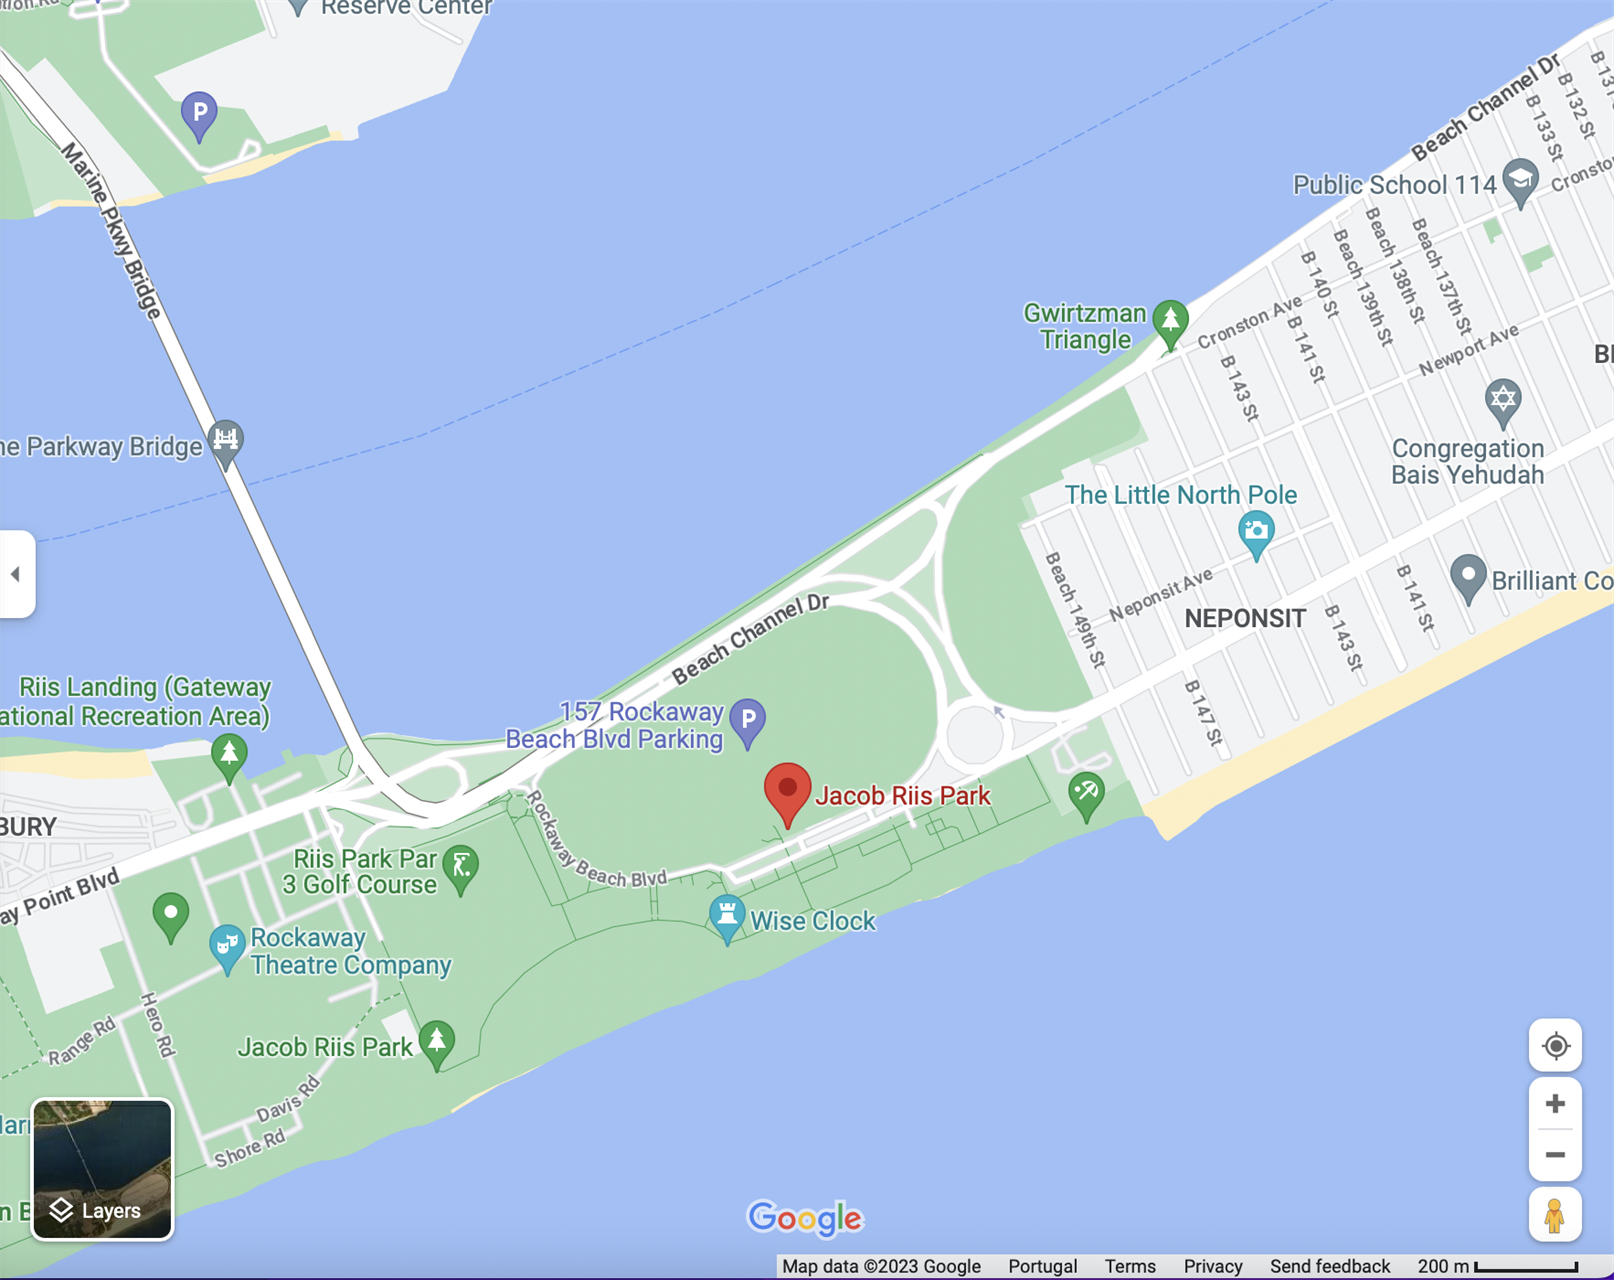 Google Map of Jacob Riis Park